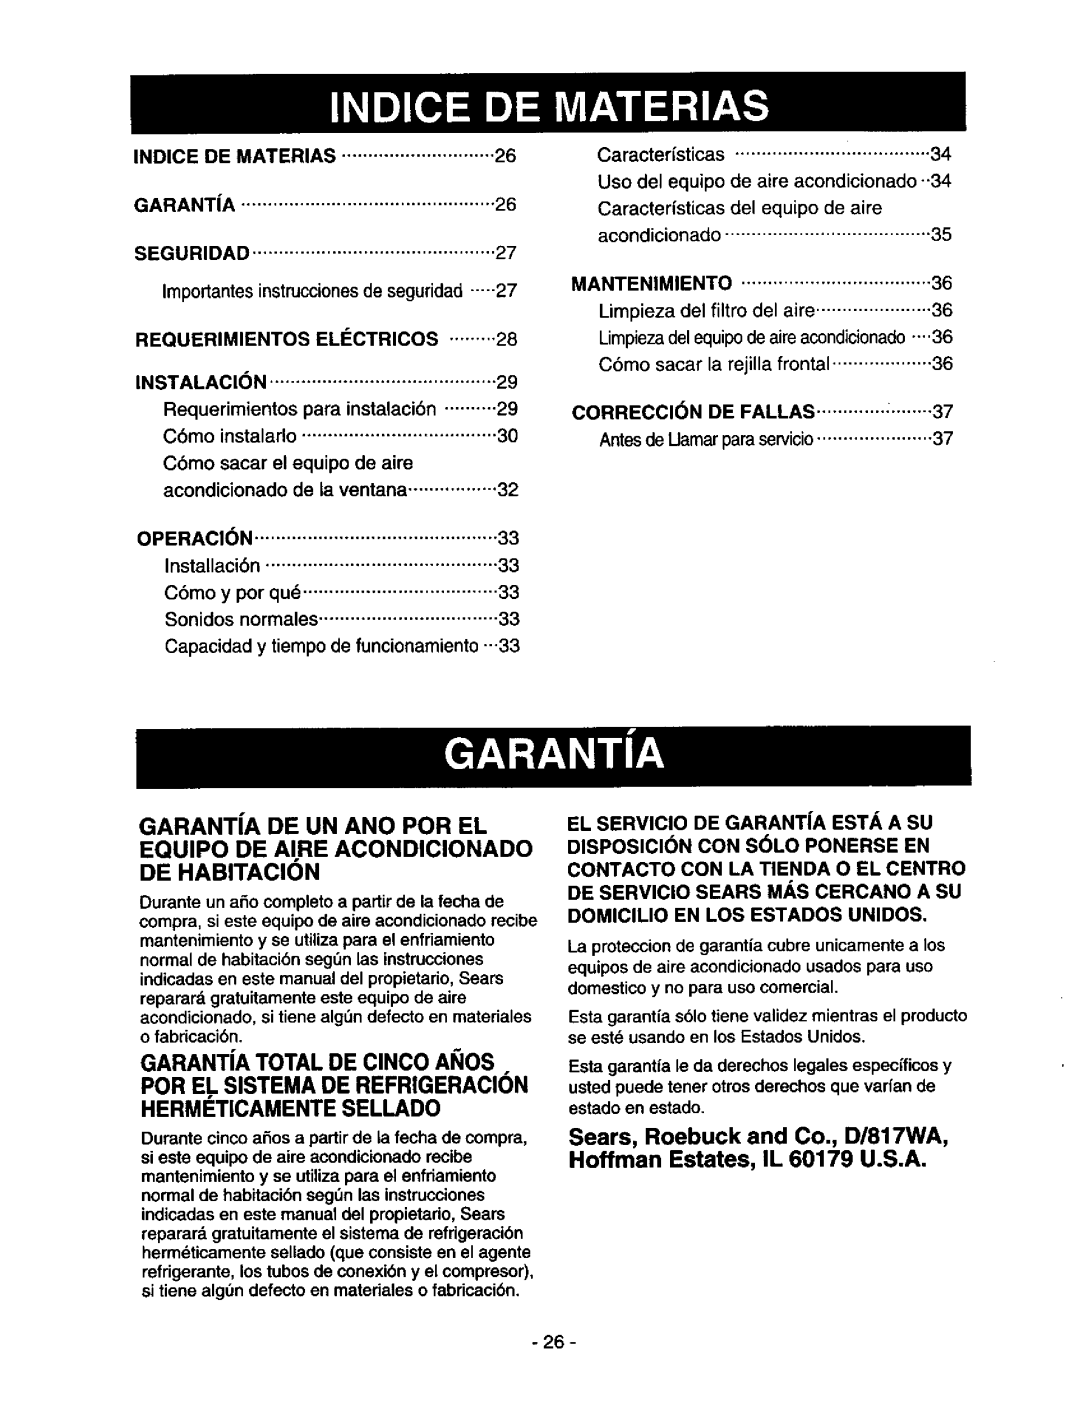 Kenmore 78122 owner manual GARANT|A TOTAL DE ClNCO AltOS 